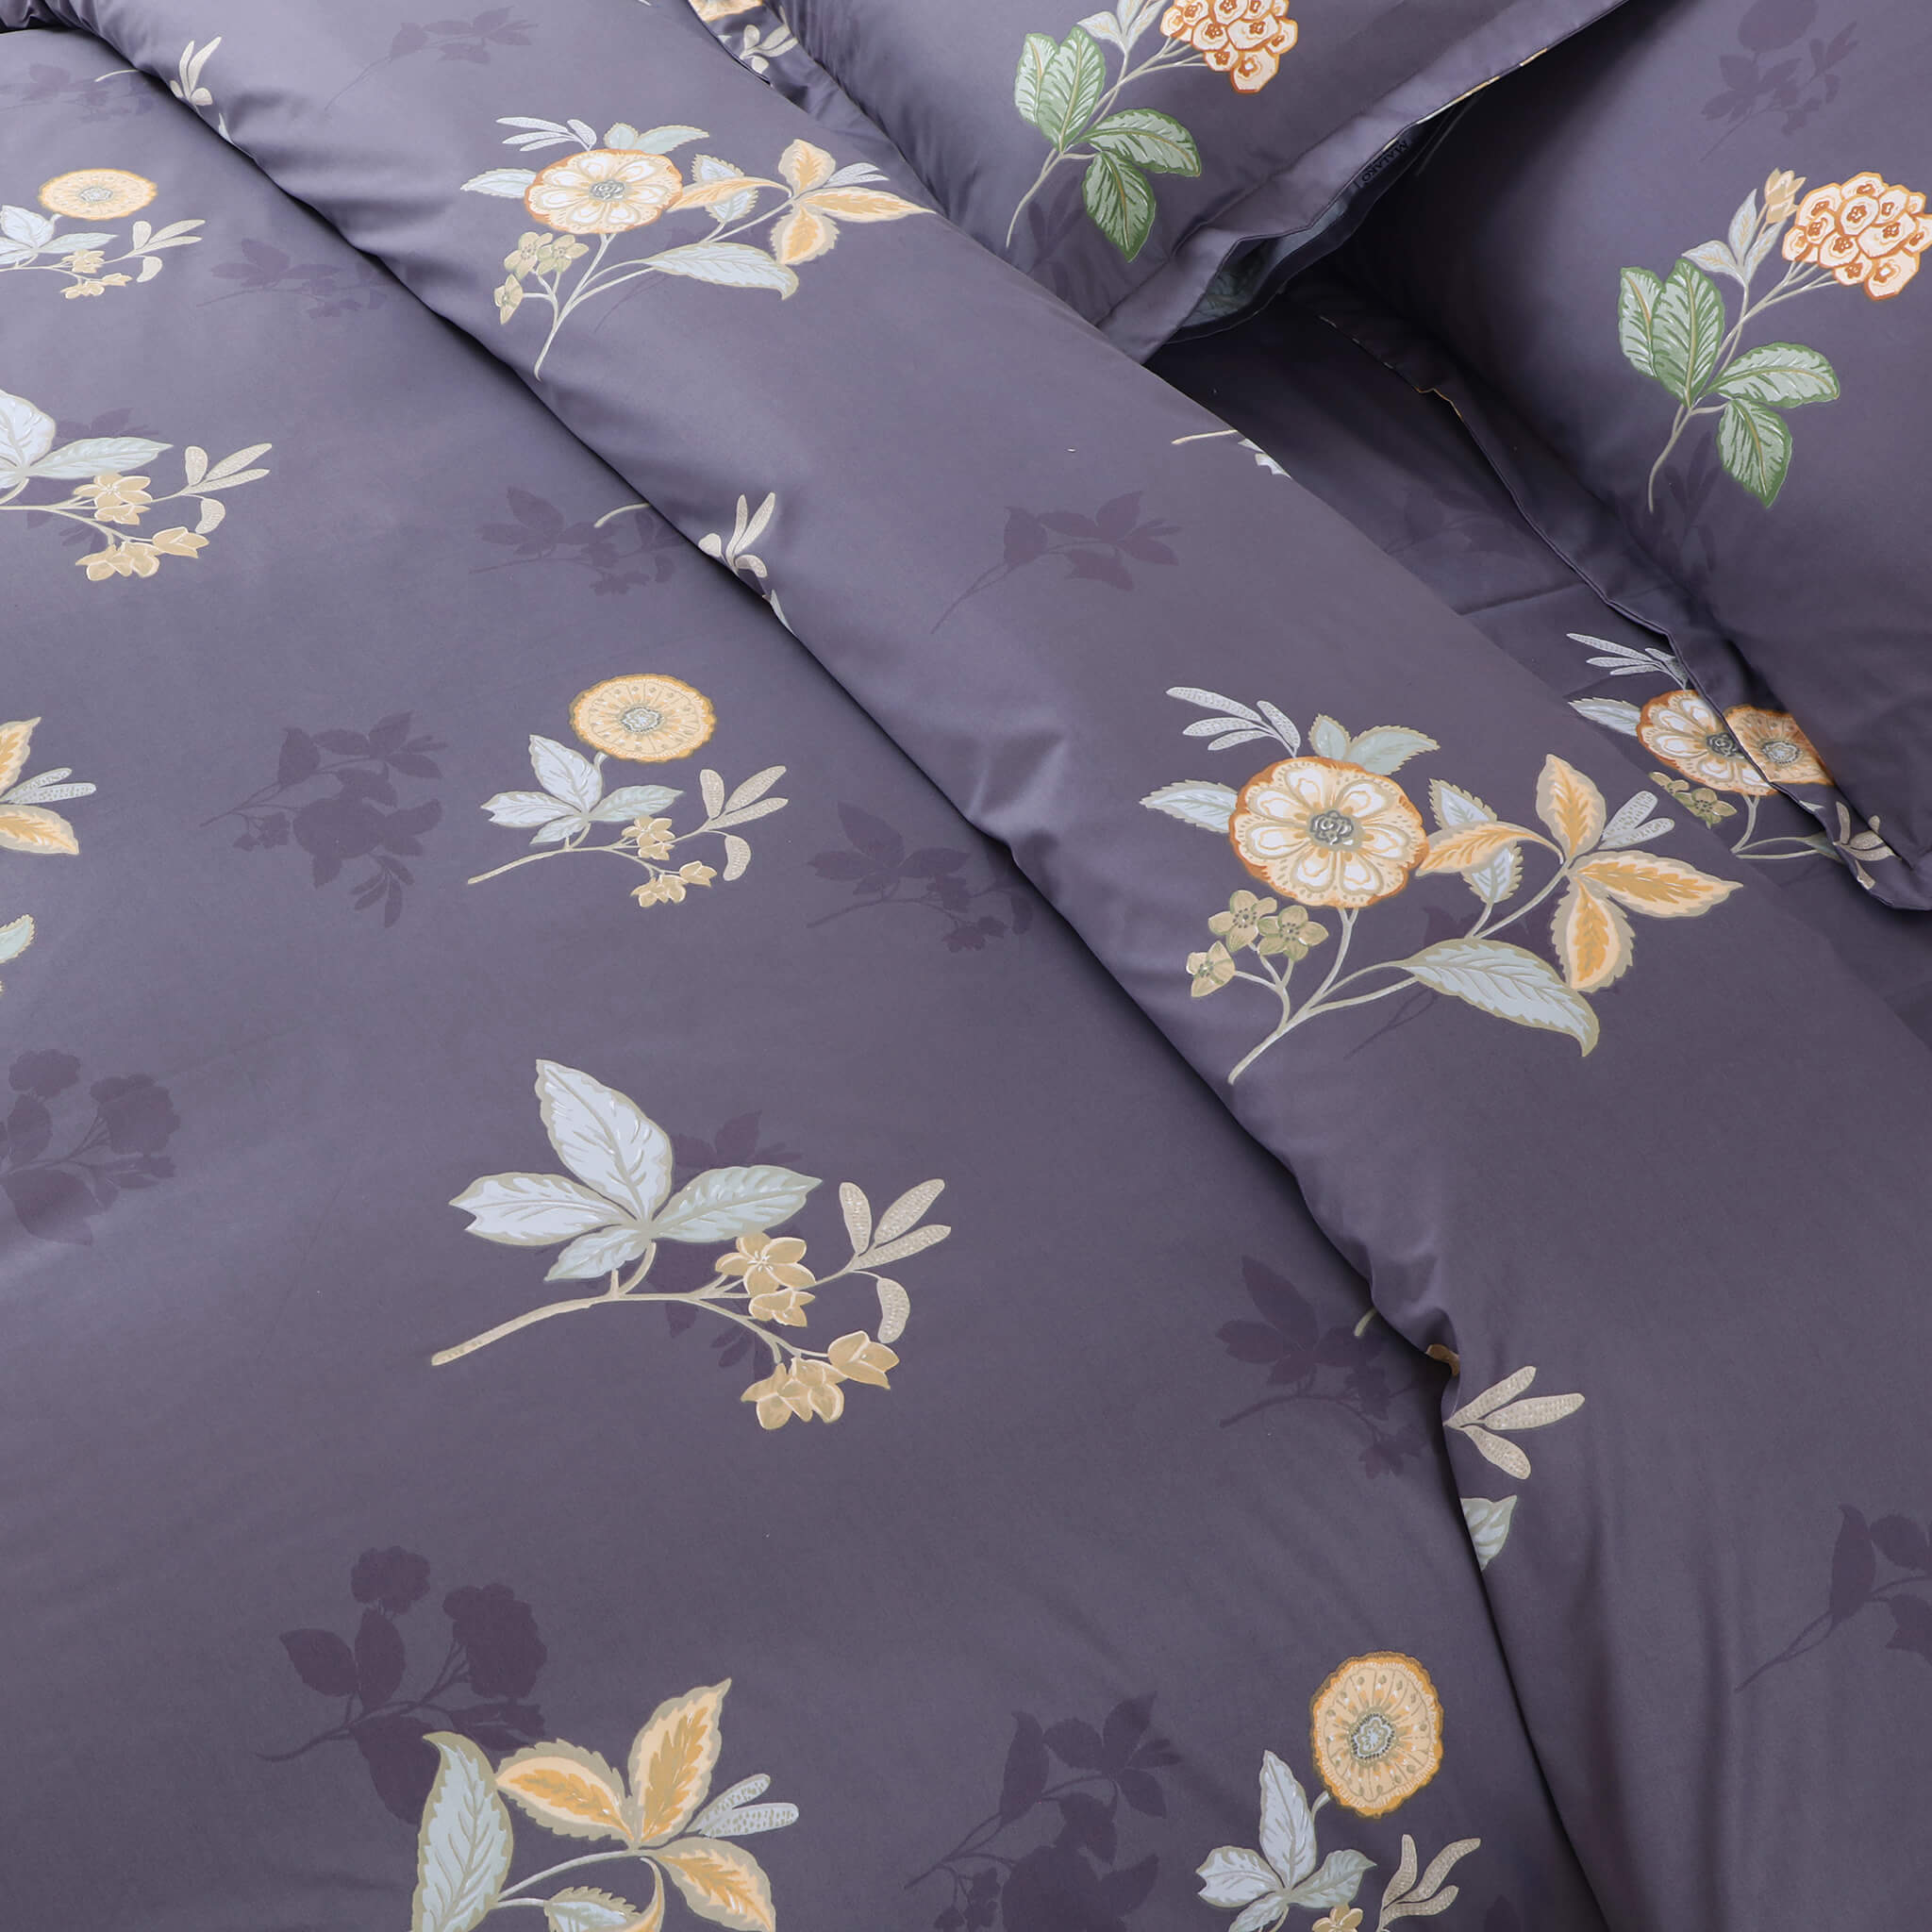 Malako Royale XL Grey Floral 100% Cotton King Size Bed Sheet/Bedding Set - MALAKO